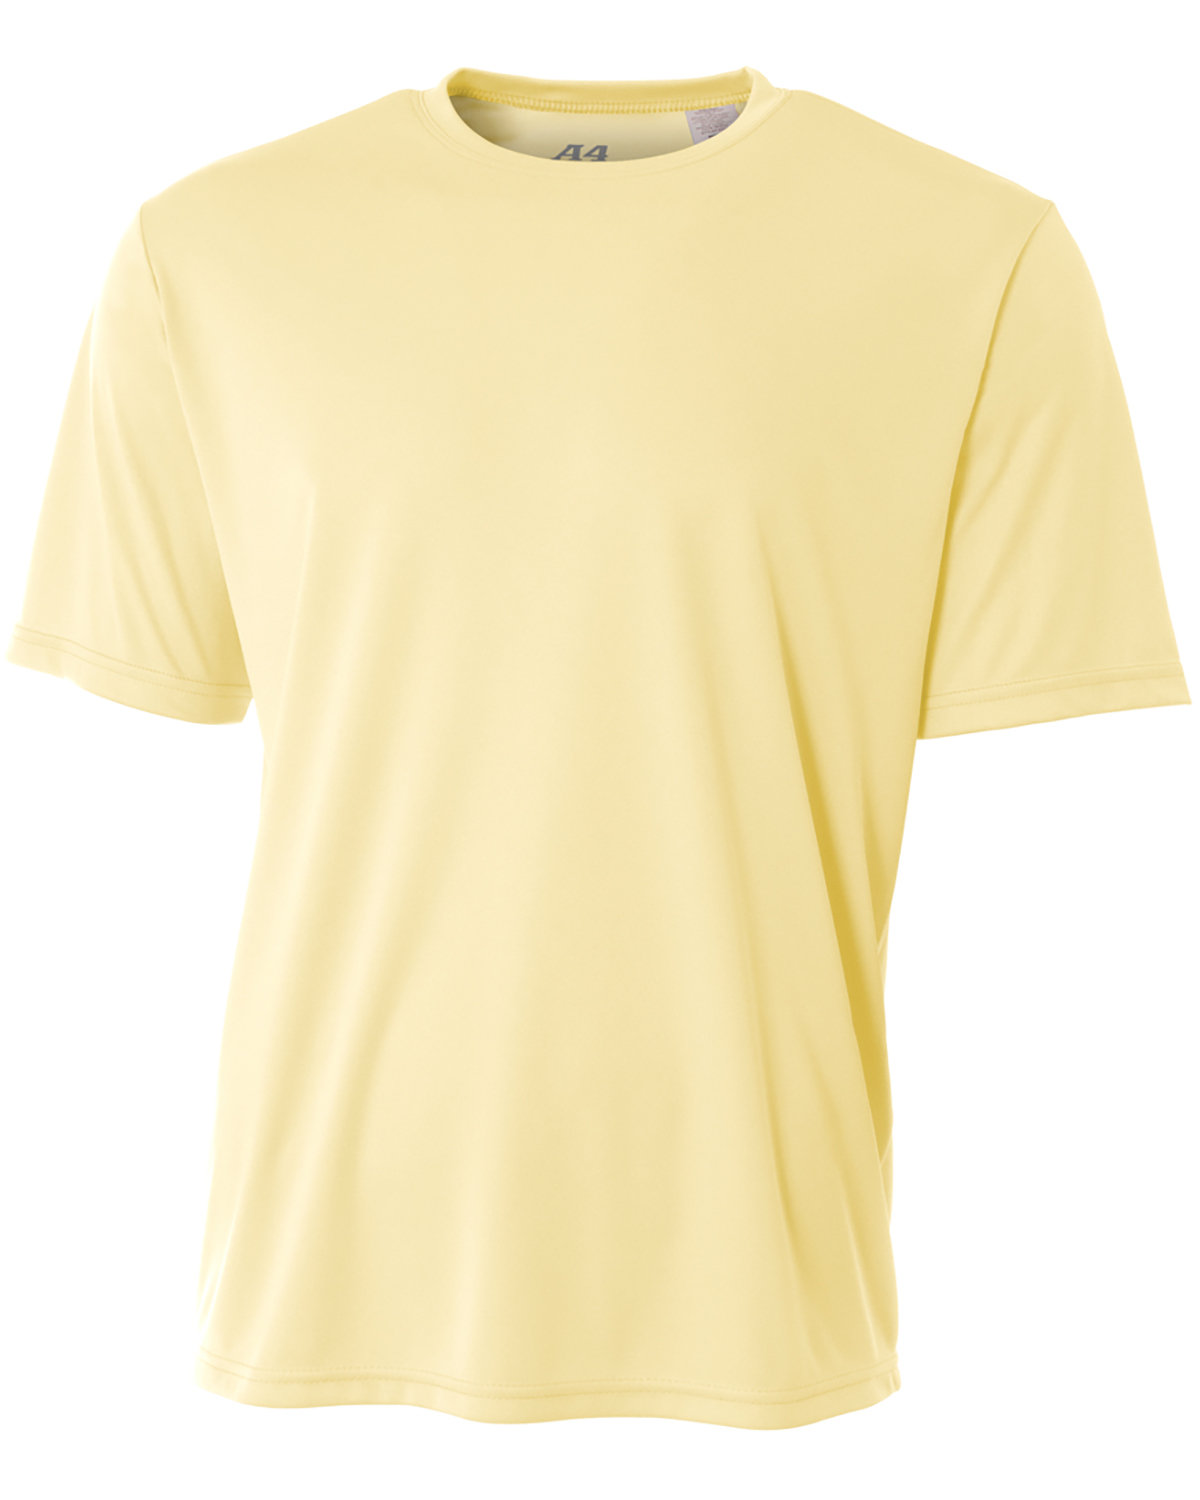 A4 Men's Cooling Performance T-Shirt LIGHT YELLOW 